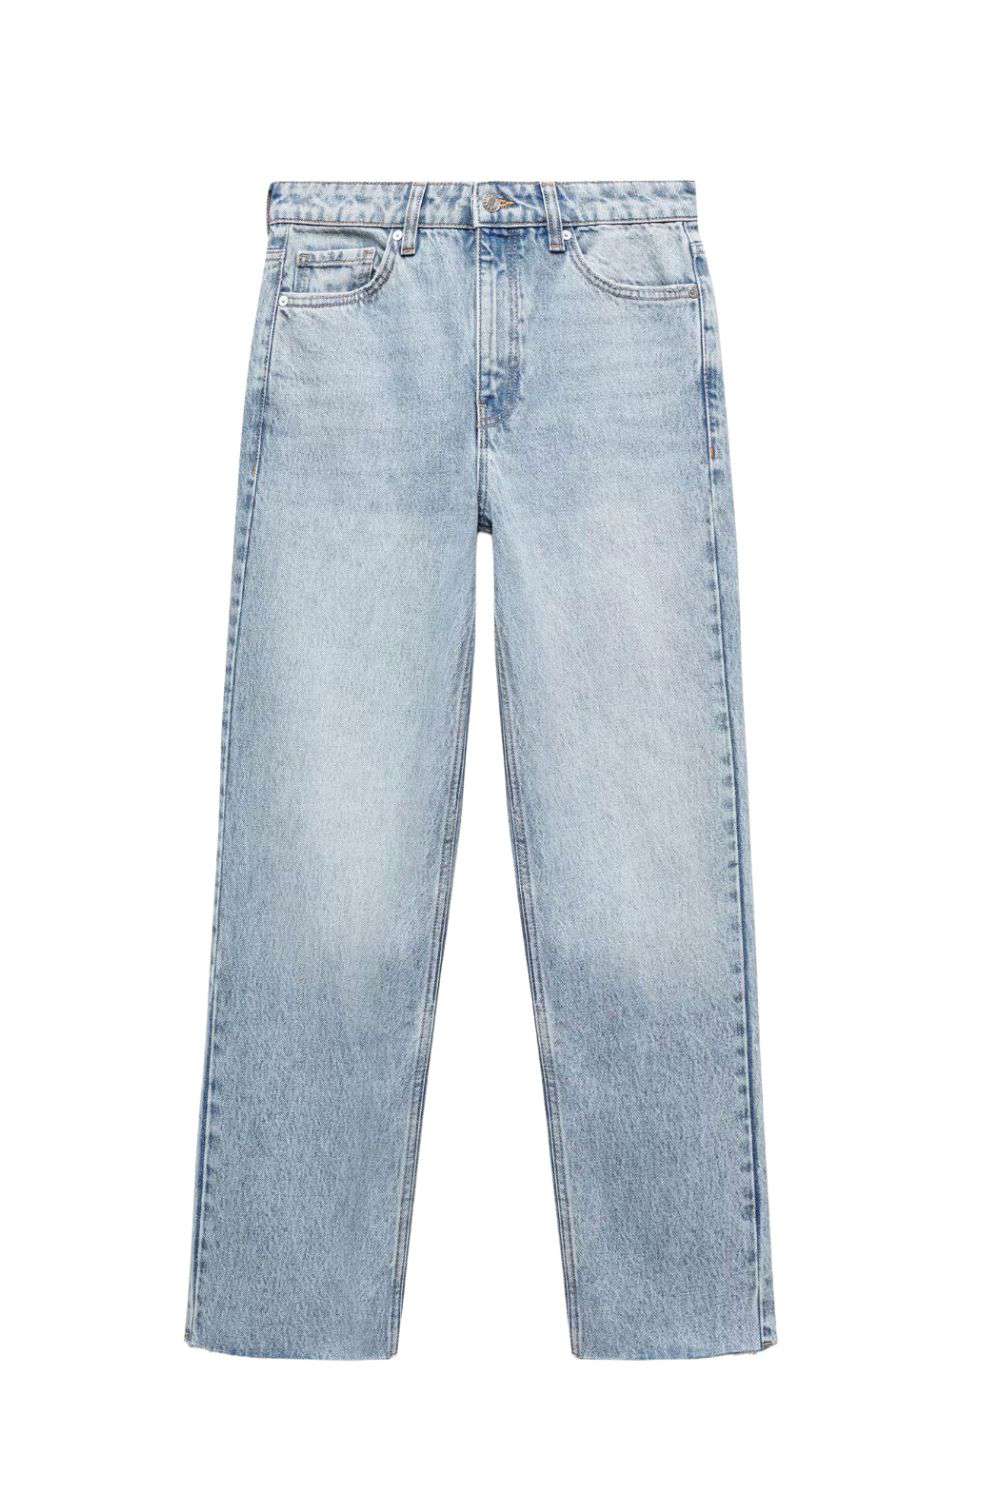 jeans mocasines 8